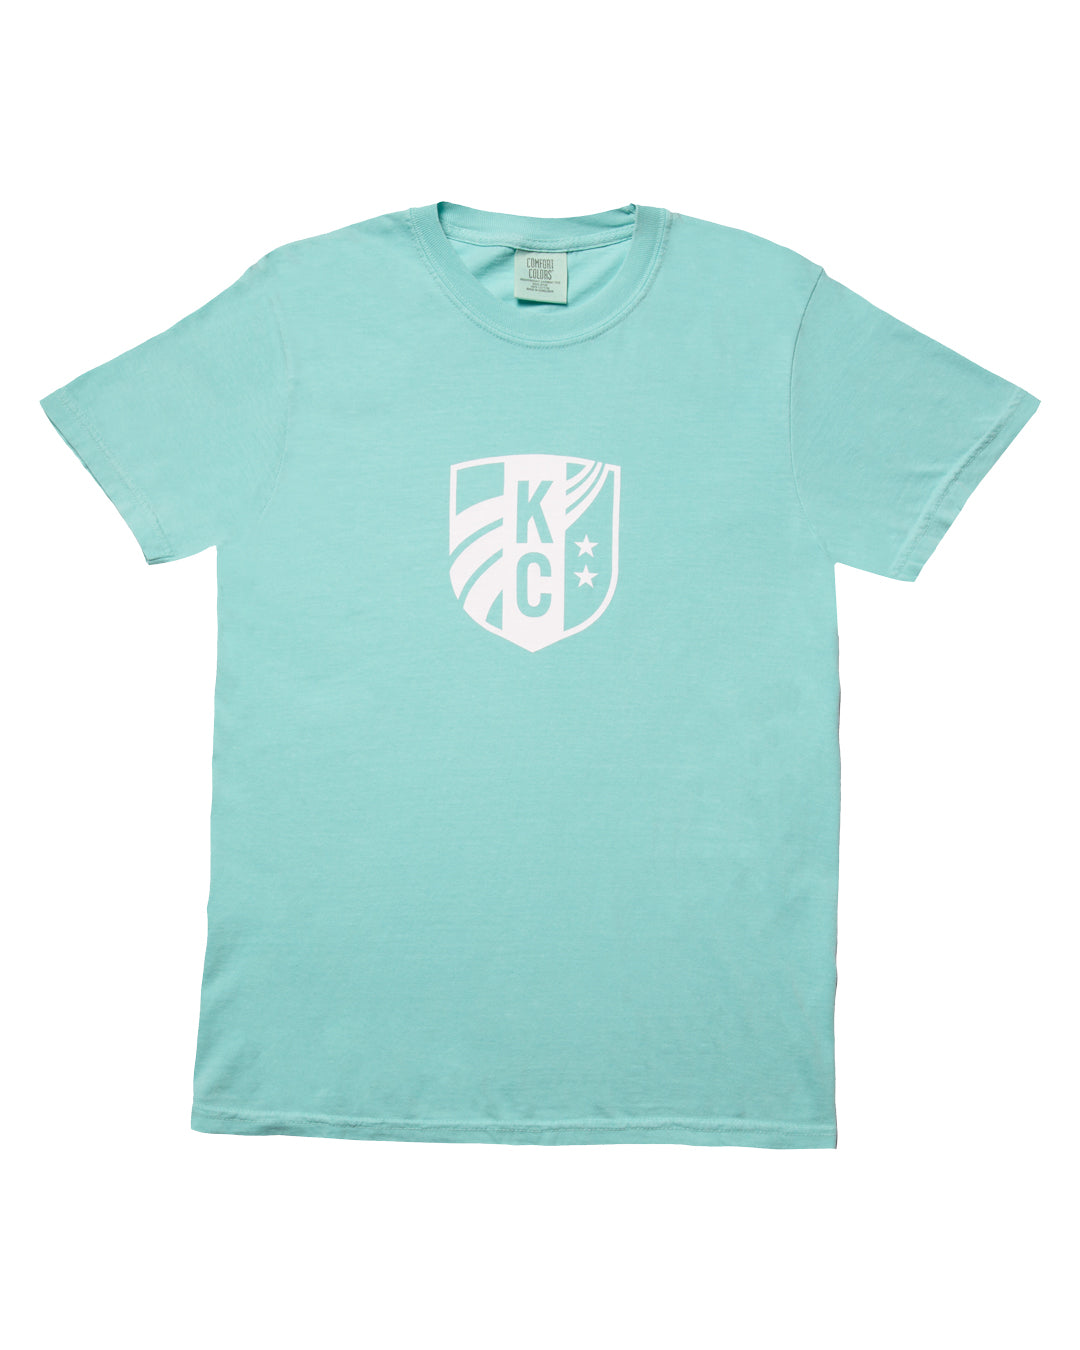 KC Current Unisex Teal Comfort Colors White Logo T-Shirt